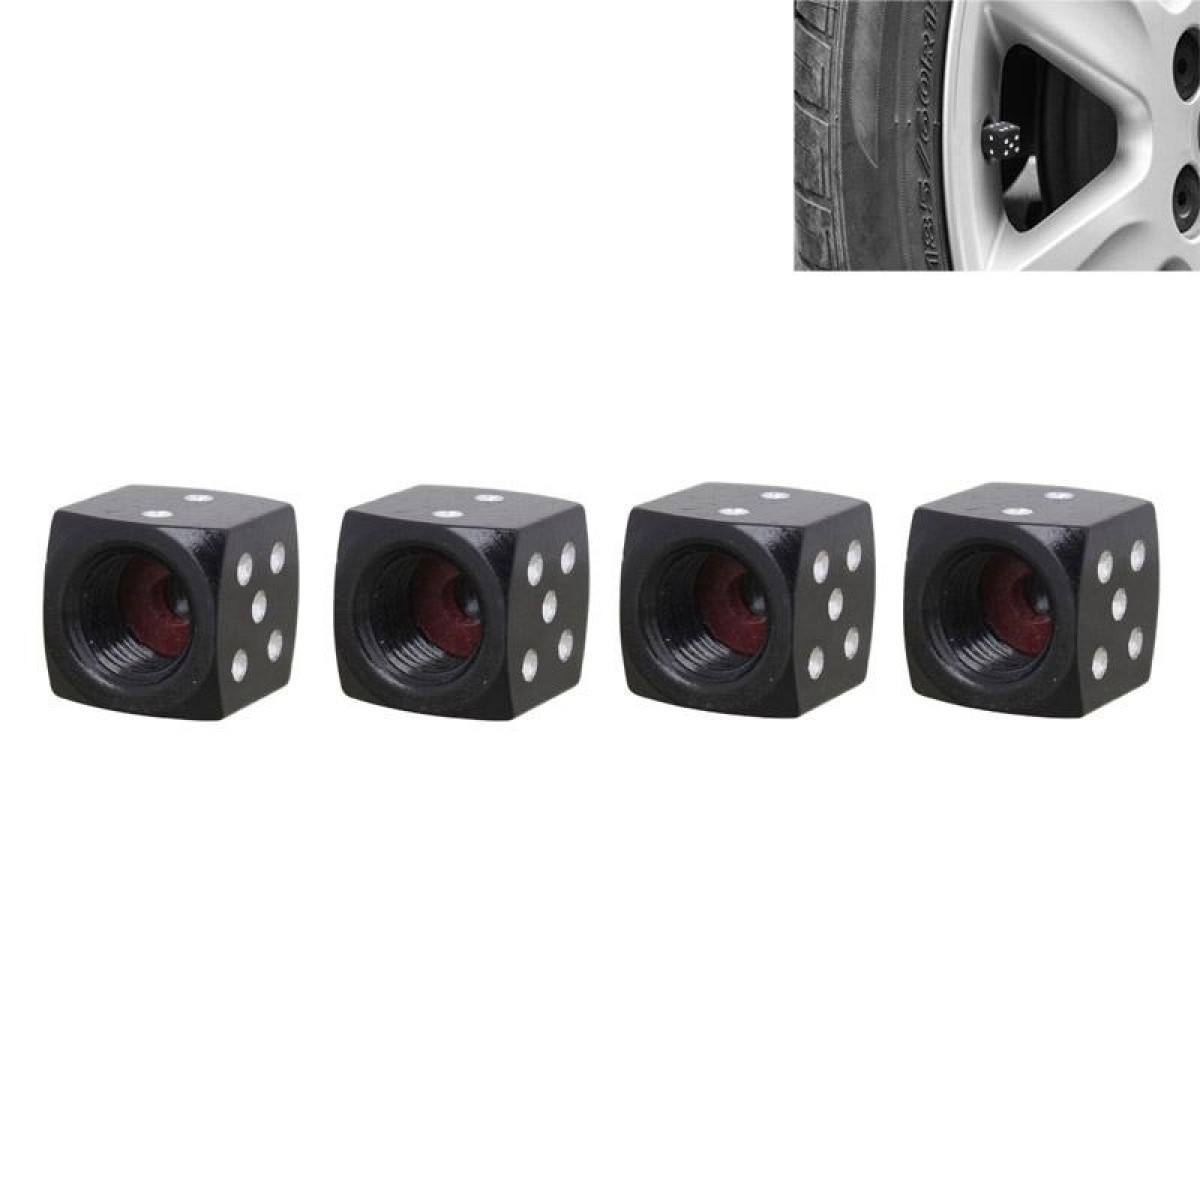 Universal 8mm Dice Style Aluminium Alloy Car Tire Valve Caps, Pack of 4(Black)